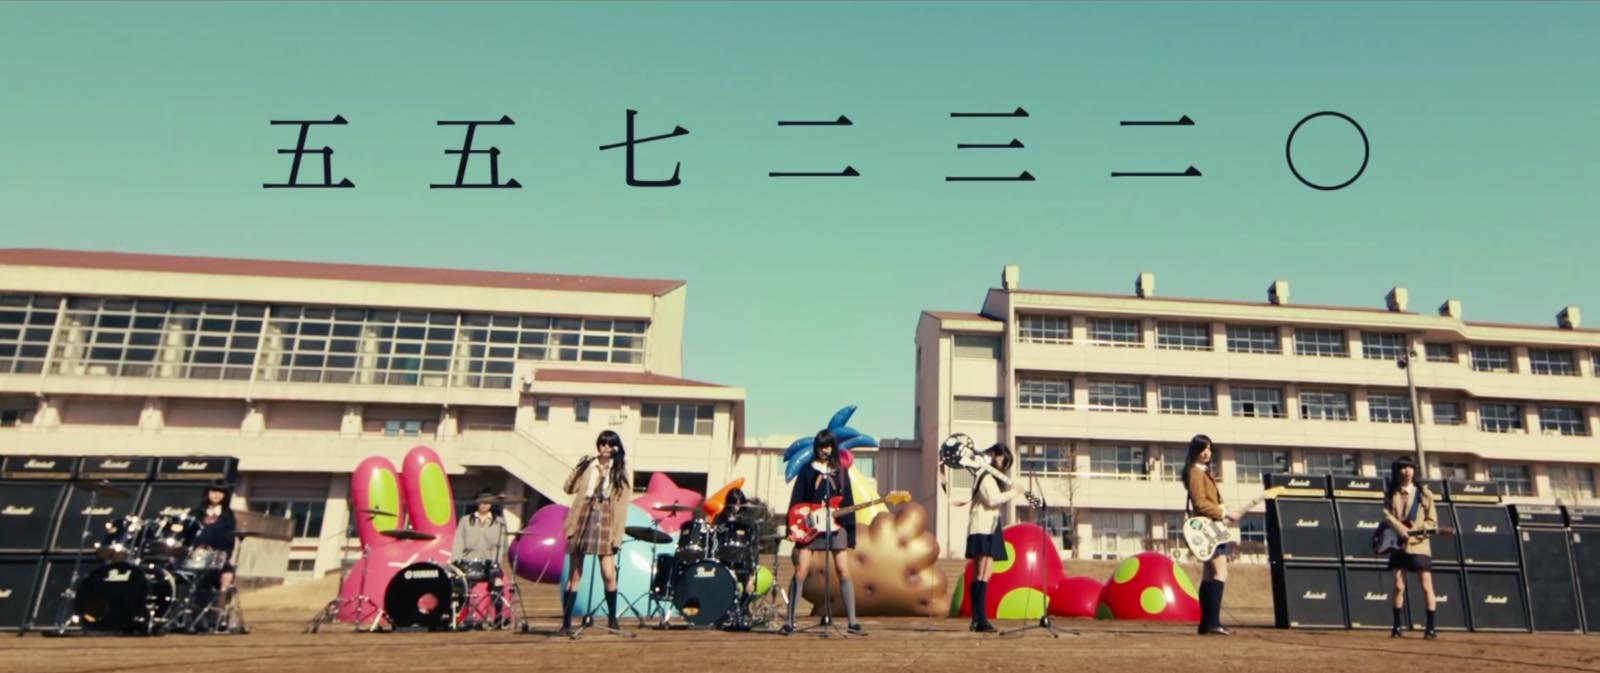 Astonishingly Skilled Girls’ Band 5572320 Reveal MV for “Hanseiki Yuutousei” But Not Their Identity